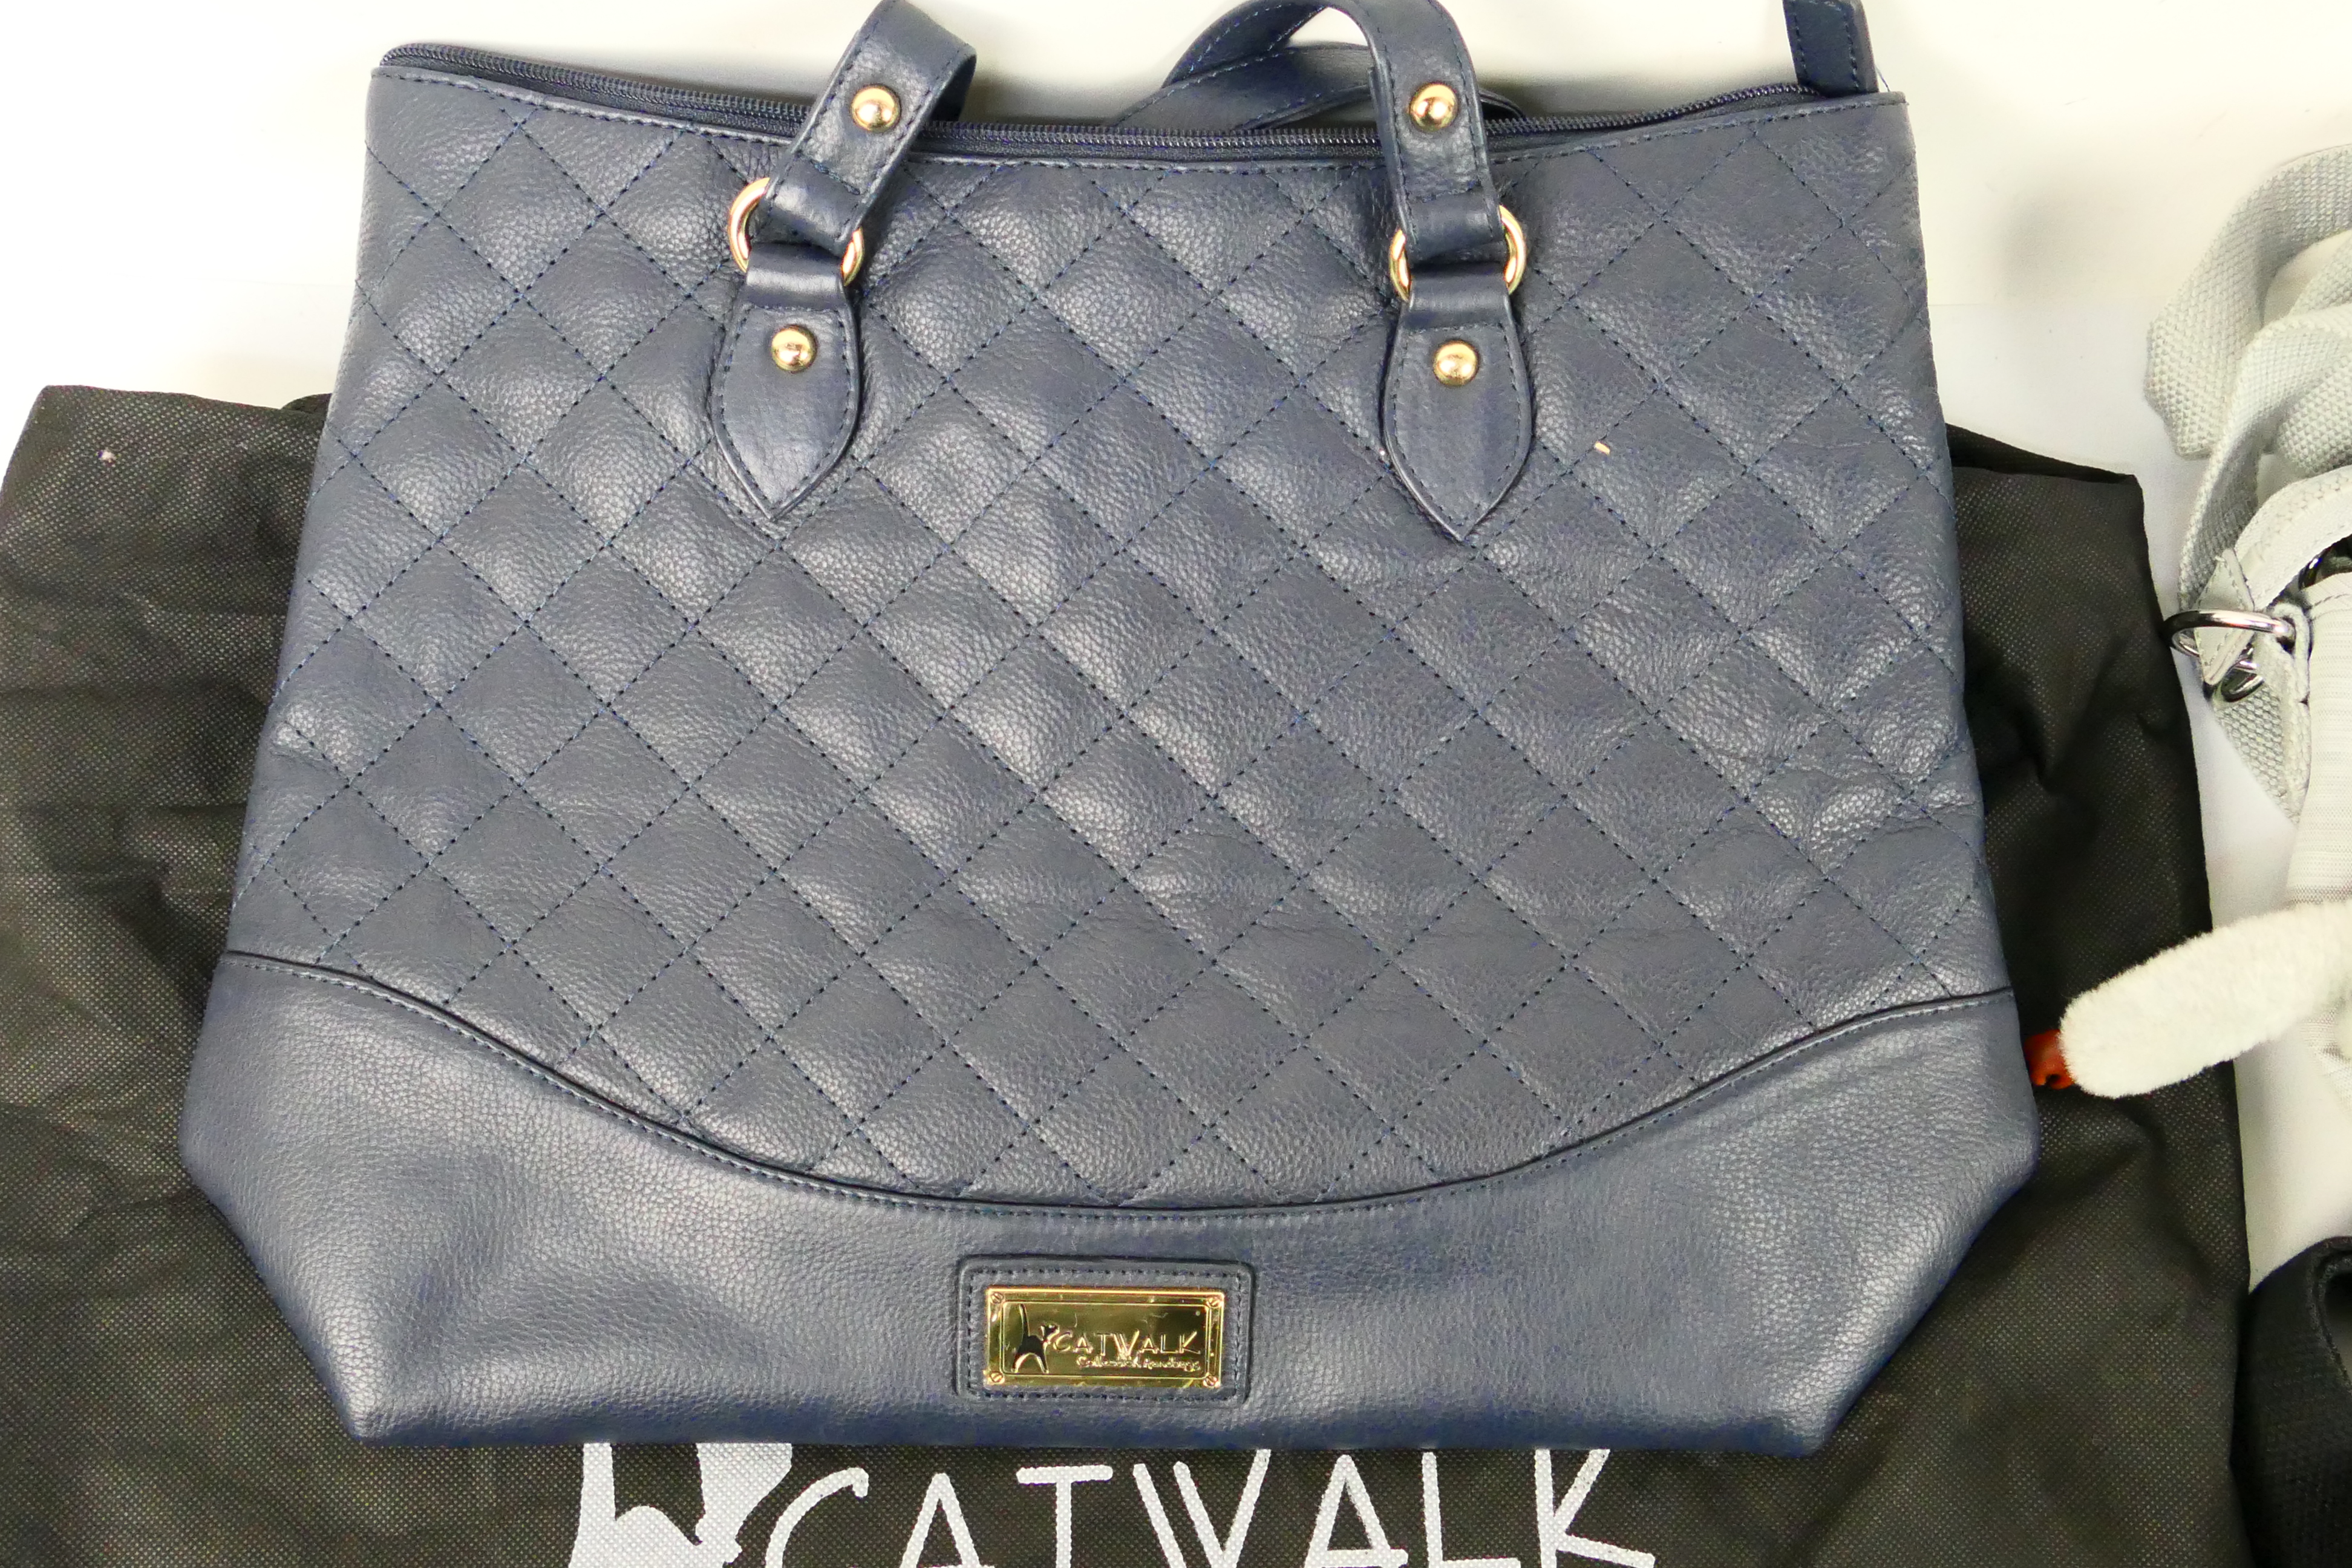 Kipling, Catwalk Collection Handbags - 4 - Image 2 of 5